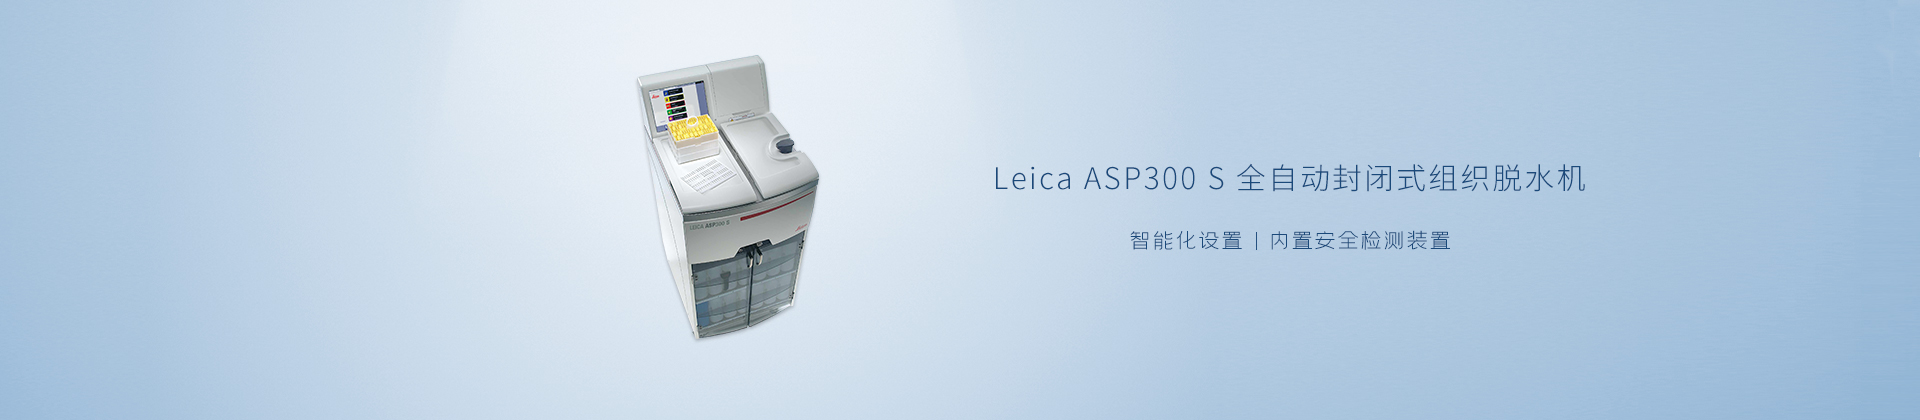 Leica ASP300 S 全自动封闭式组织脱水机